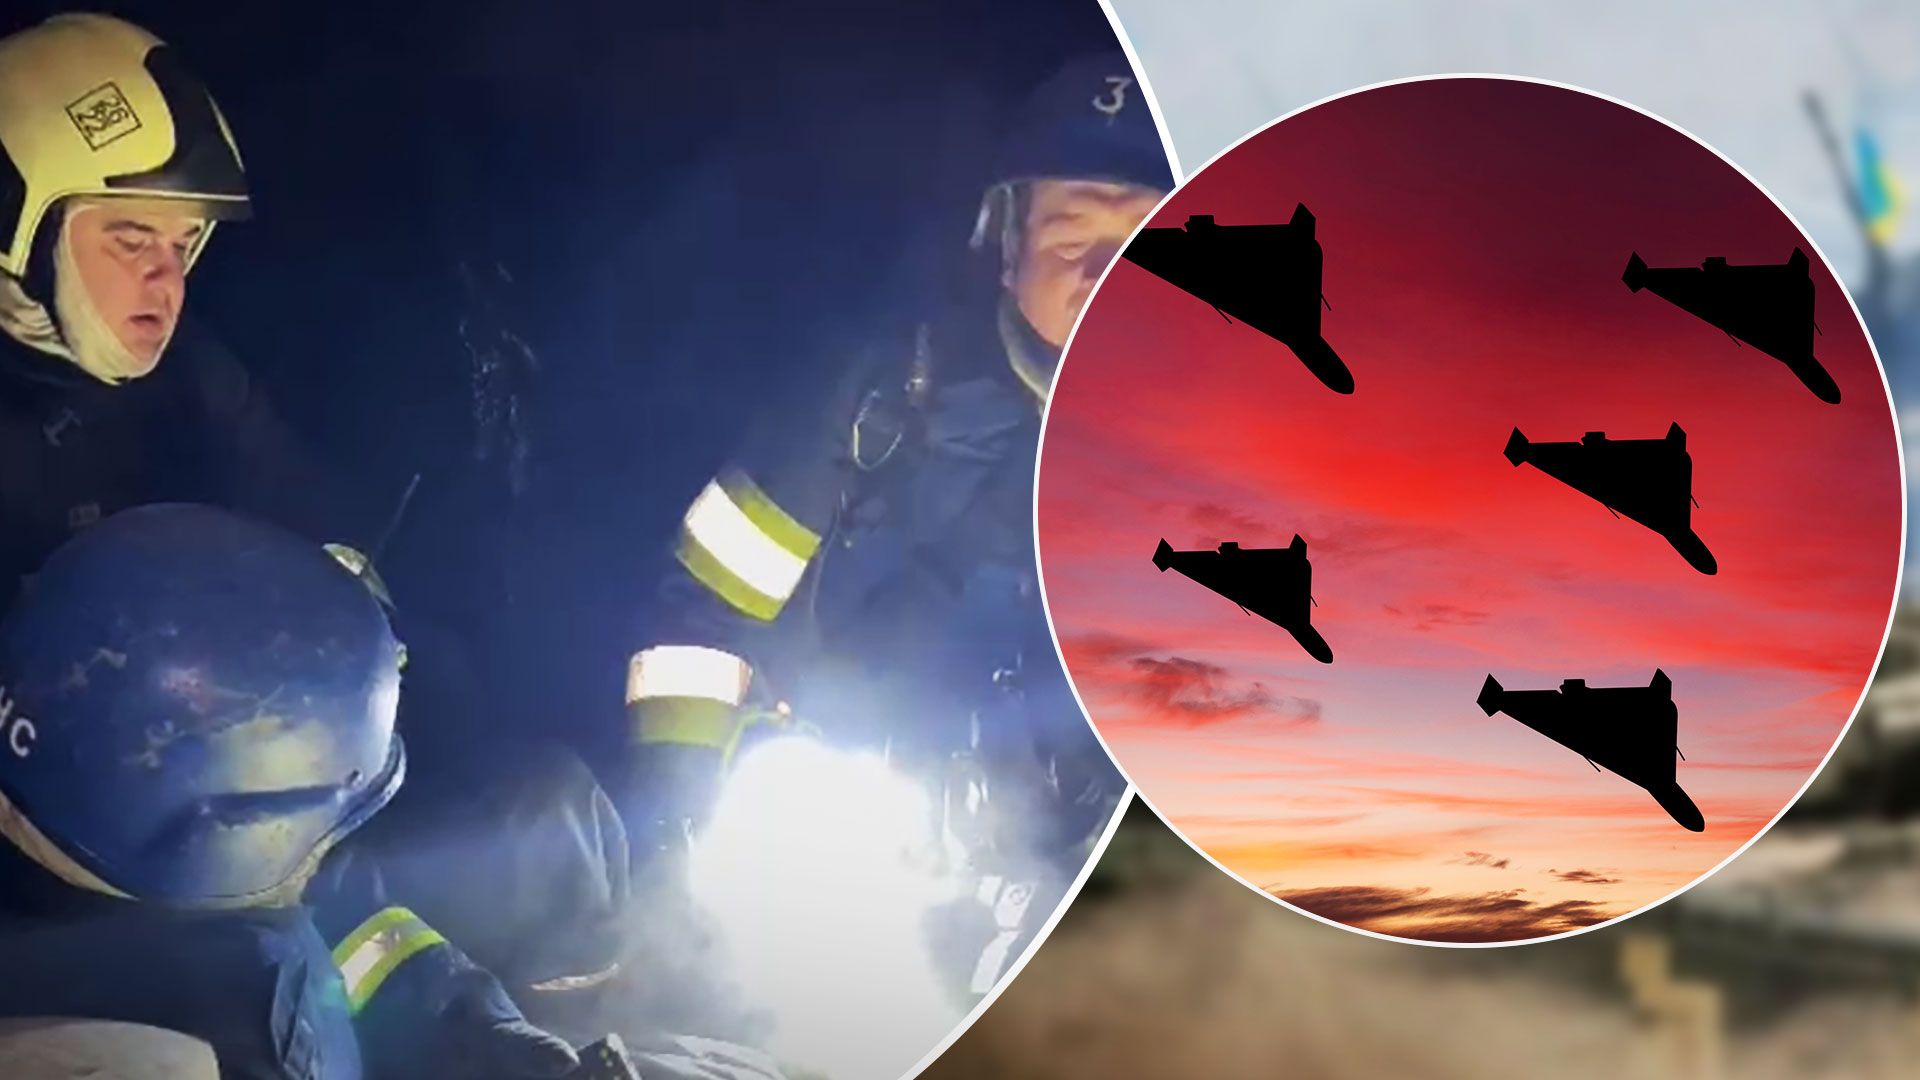 Атака на Киев 25 ноября - видео, как спасатели попали под удар дронов - 24 Канал